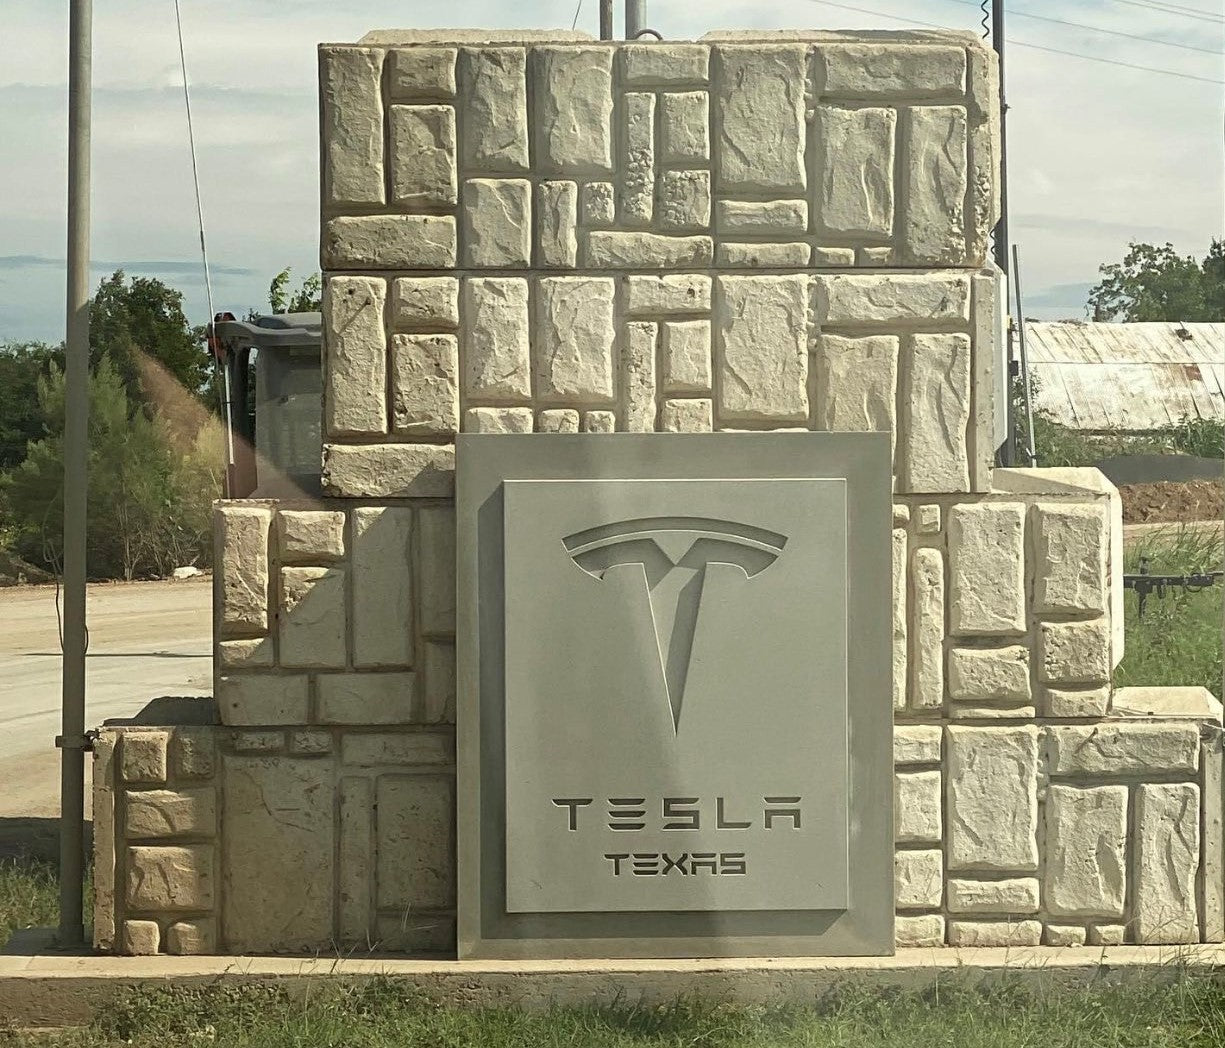 Elon Musk Updates Tesla Giga Texas Plan: “Internal Semi Truck Roads Inside A Giant Monolithic Building”